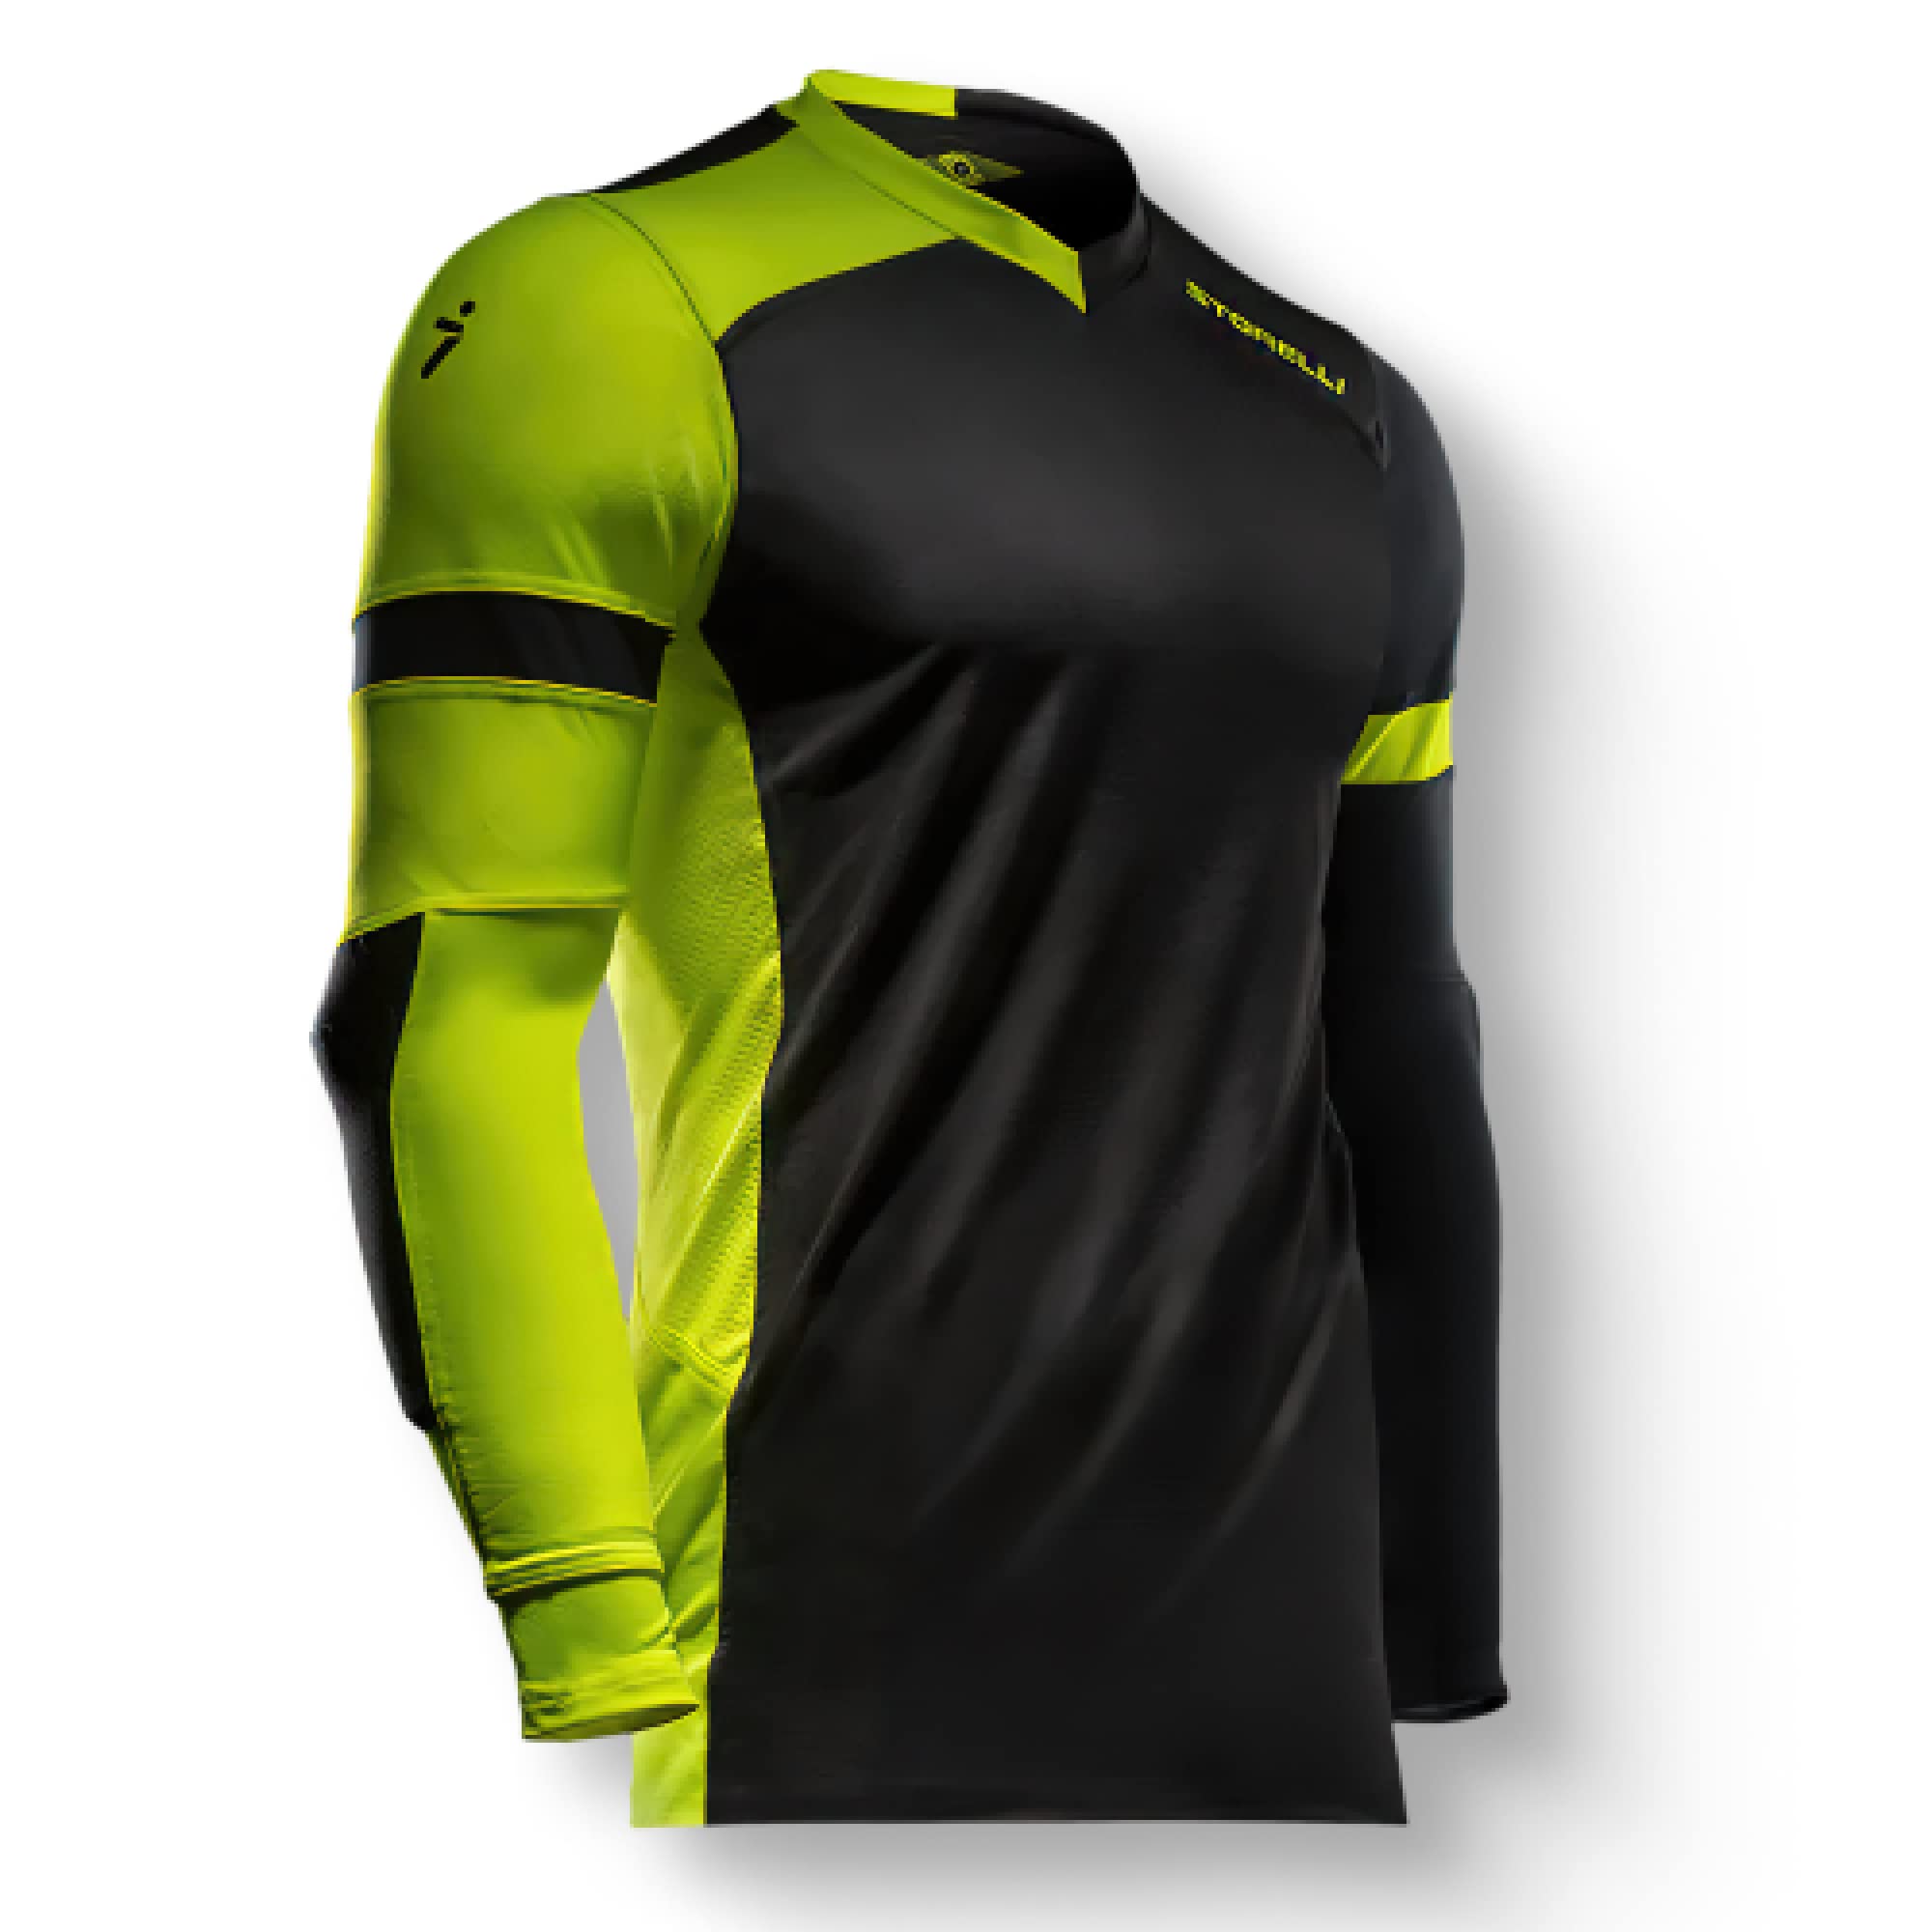 Storelli ExoShield Gladiator Goalkeeper Jersey | Padded Elbow Sleeves | Lightweight Soccer Jersey Shirt